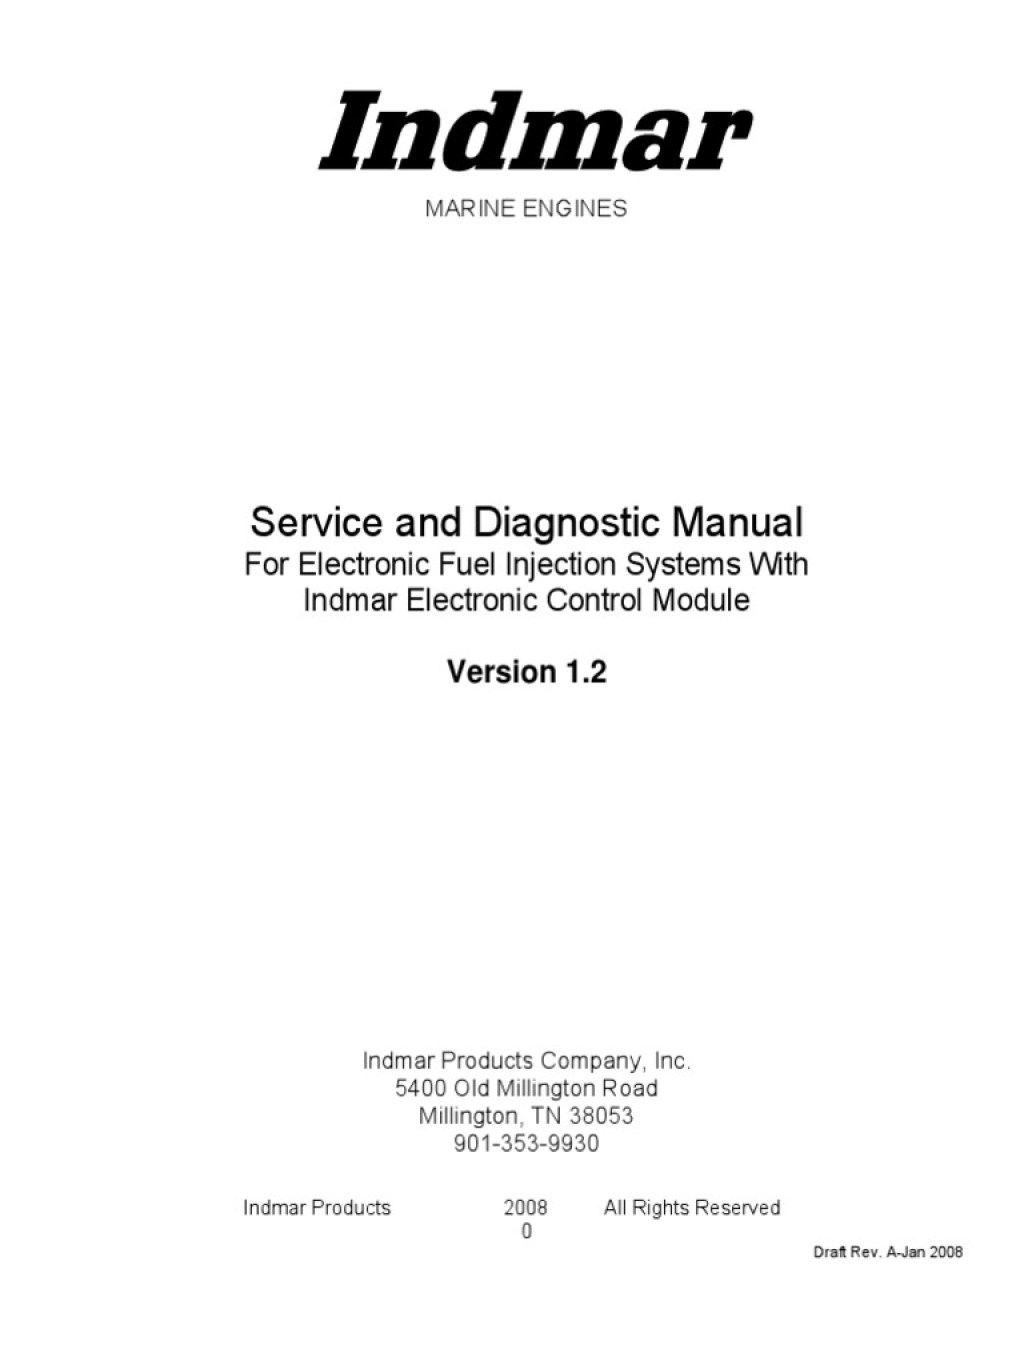 Picture of: Indmar Diagnostic Manual Version